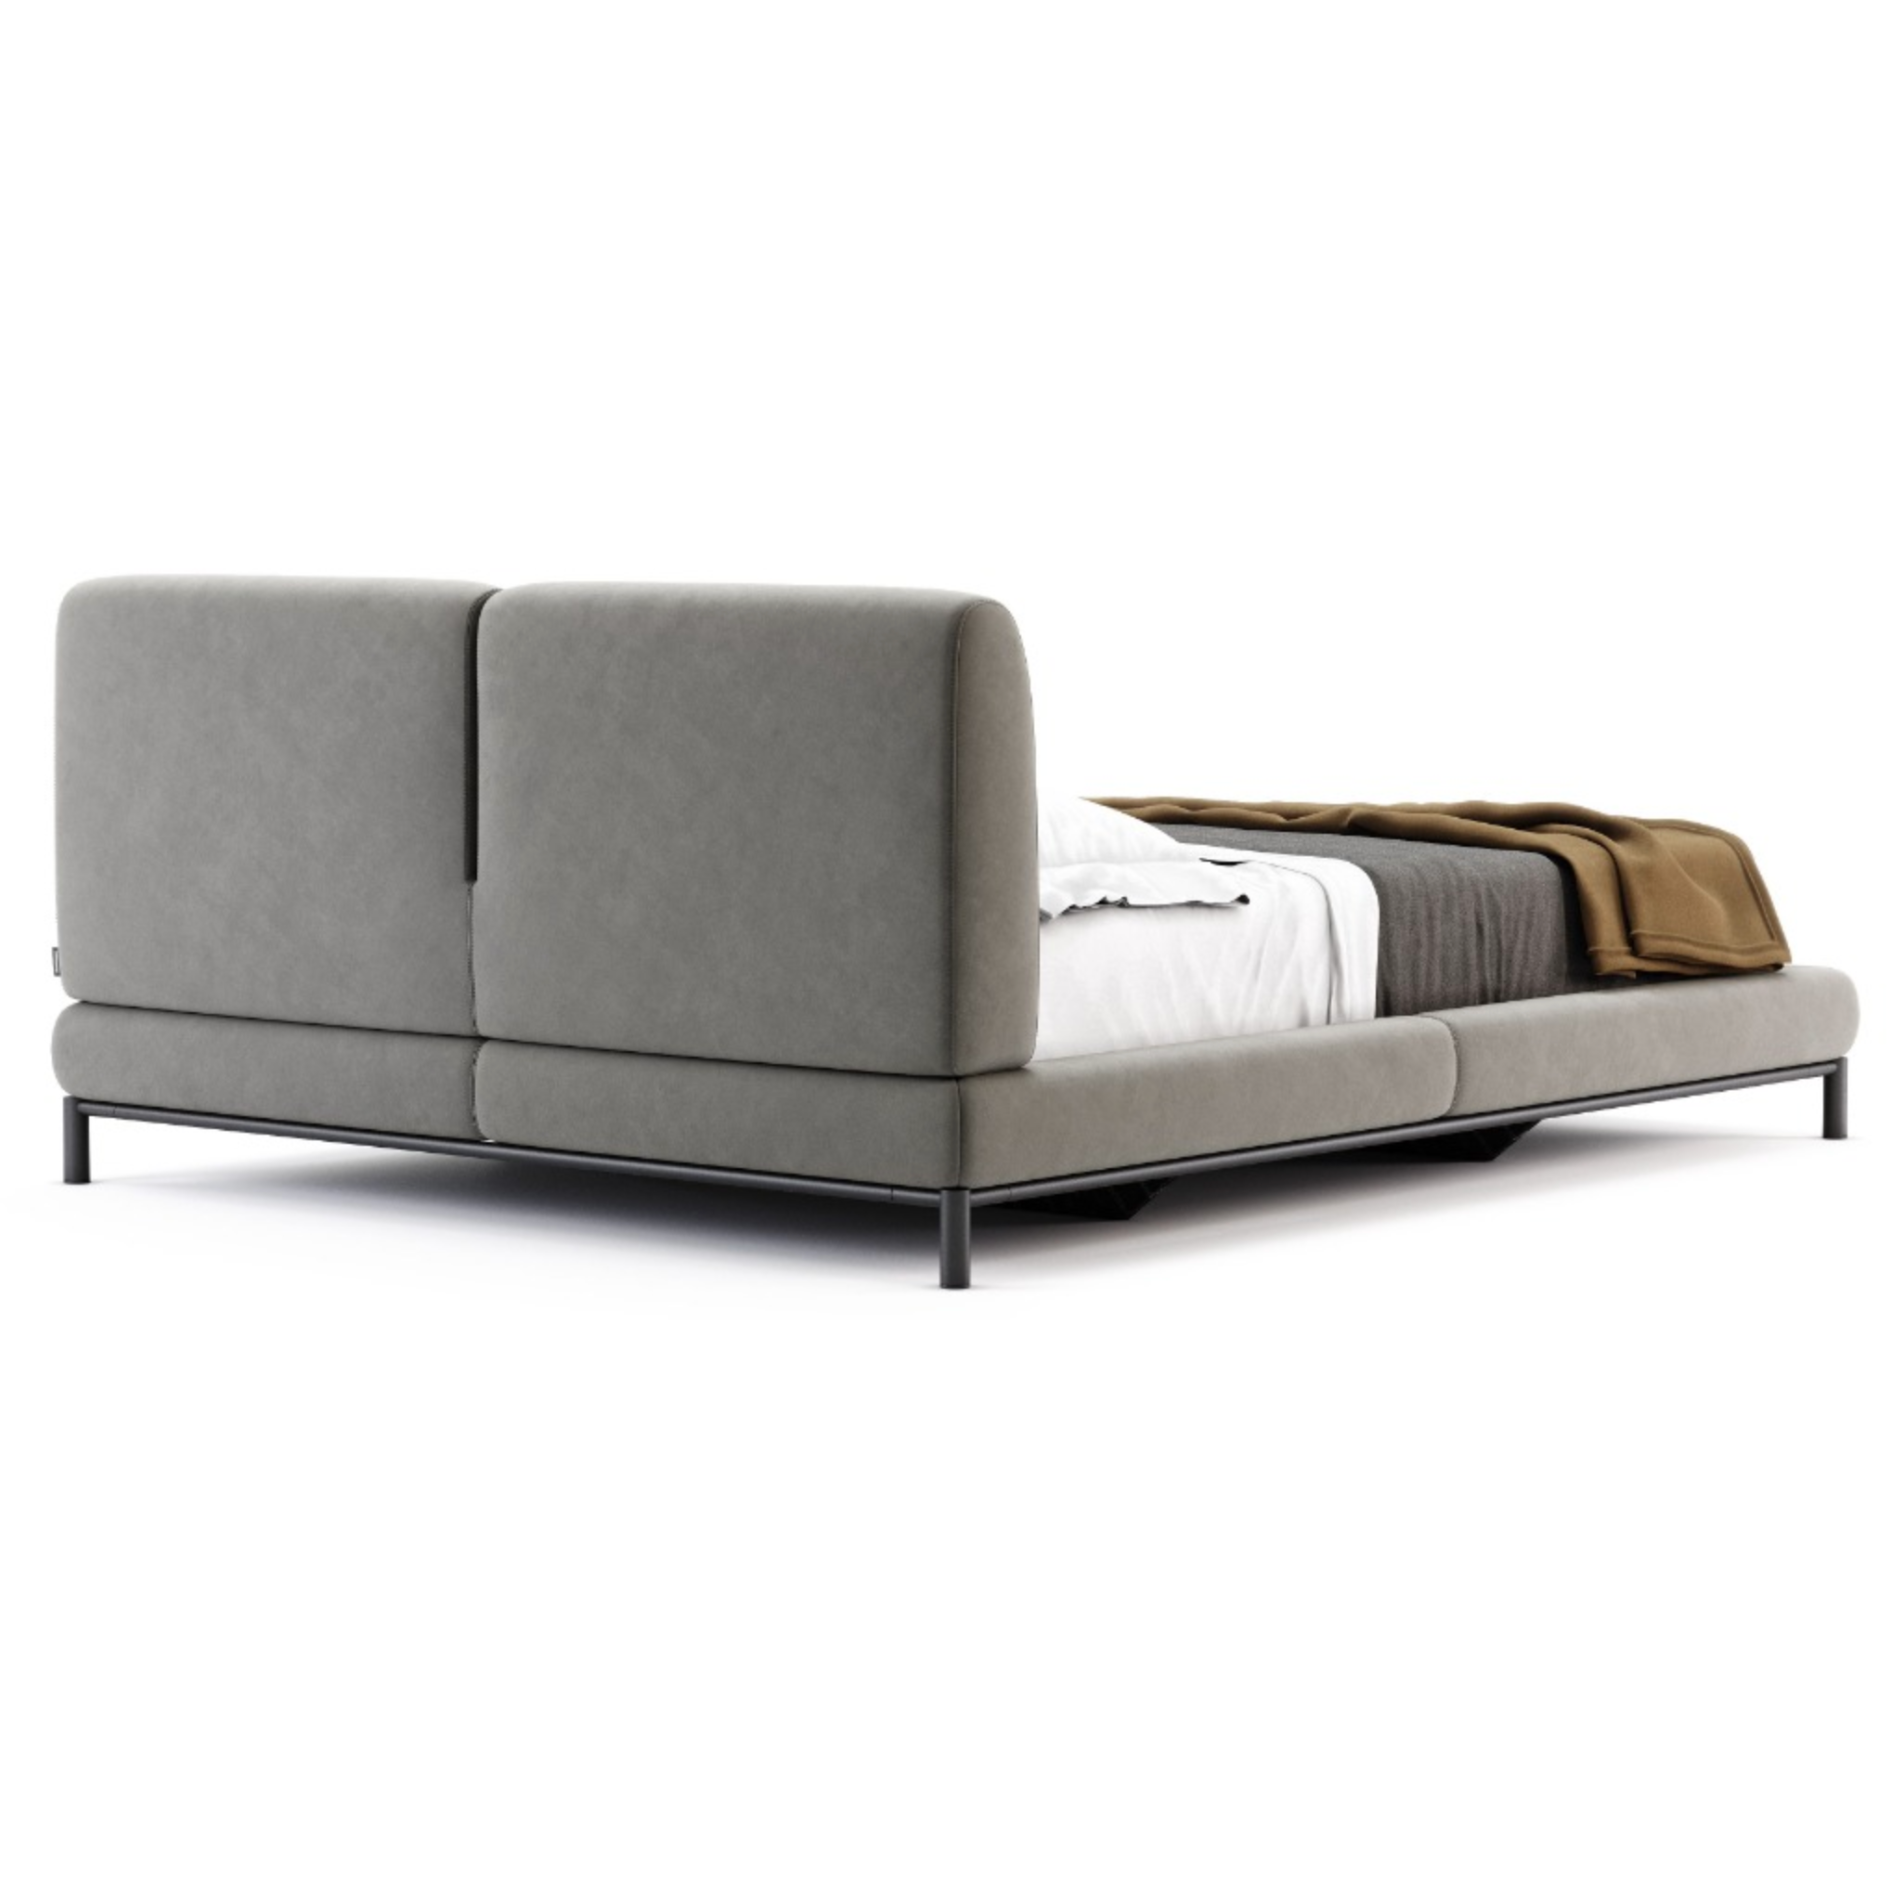 Domkapa Margot King Size Bed - Customisable | Modern Furniture + Decor